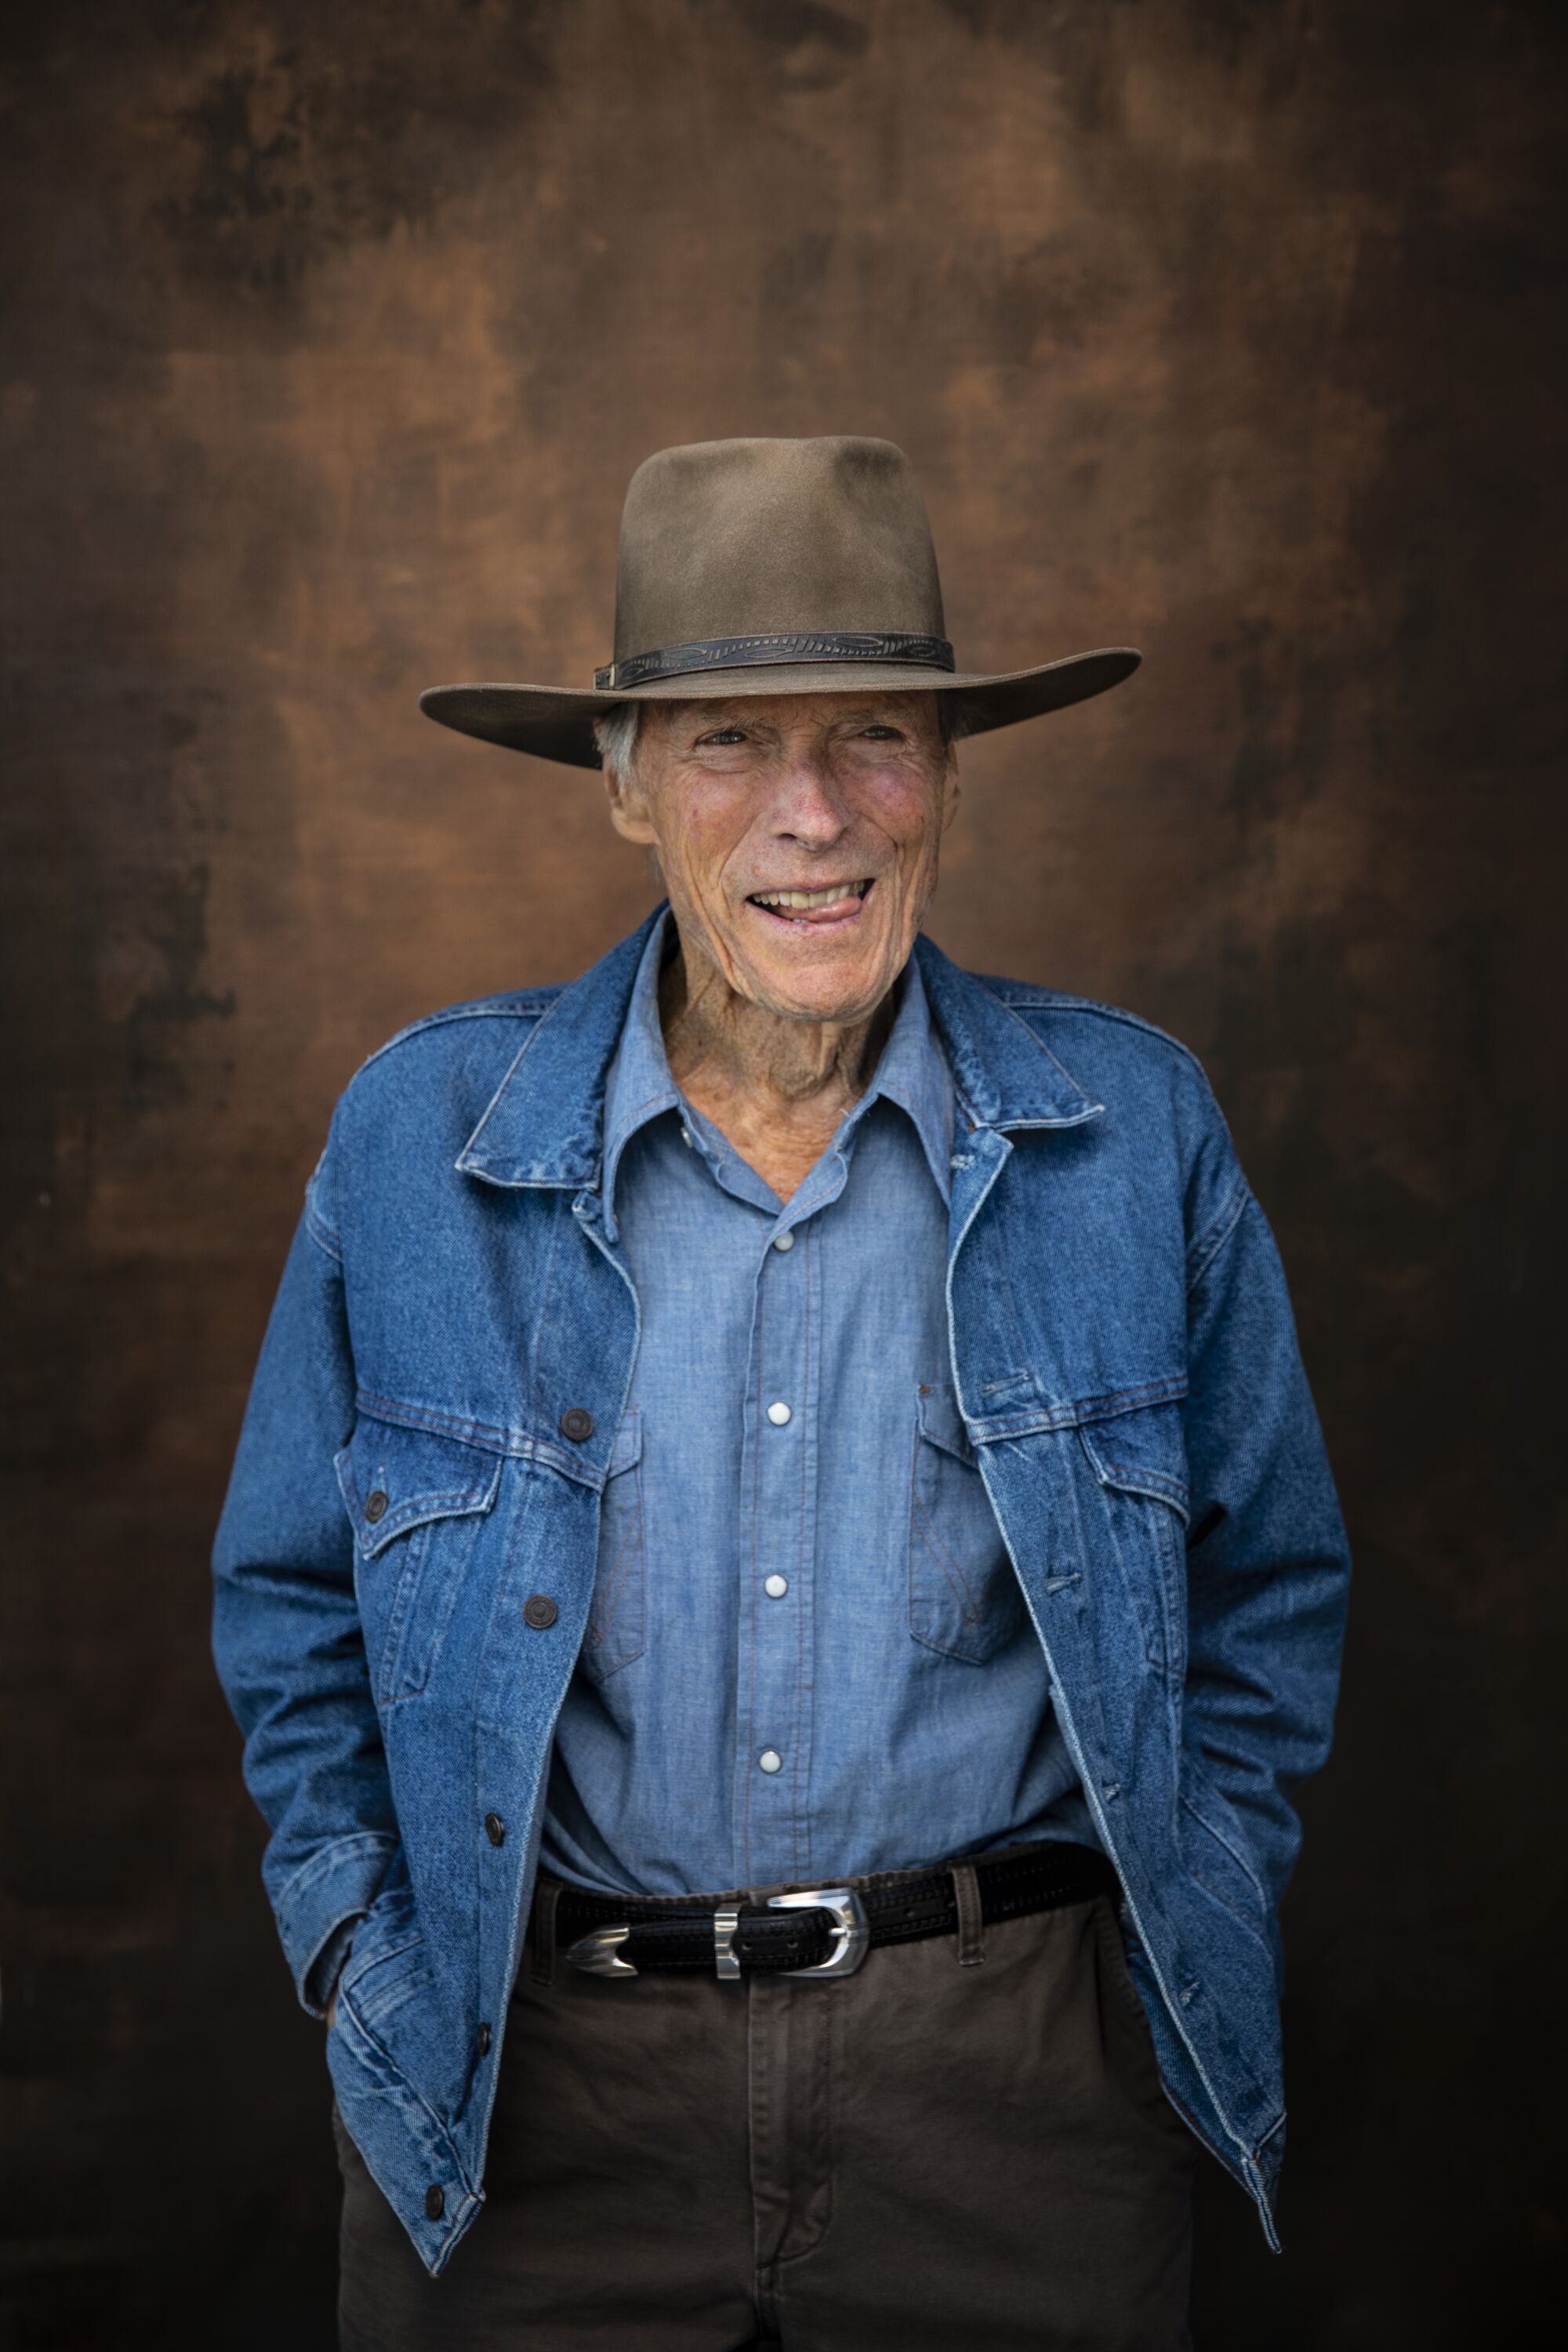  A portrait of Oscar-winning director Clint Eastwood